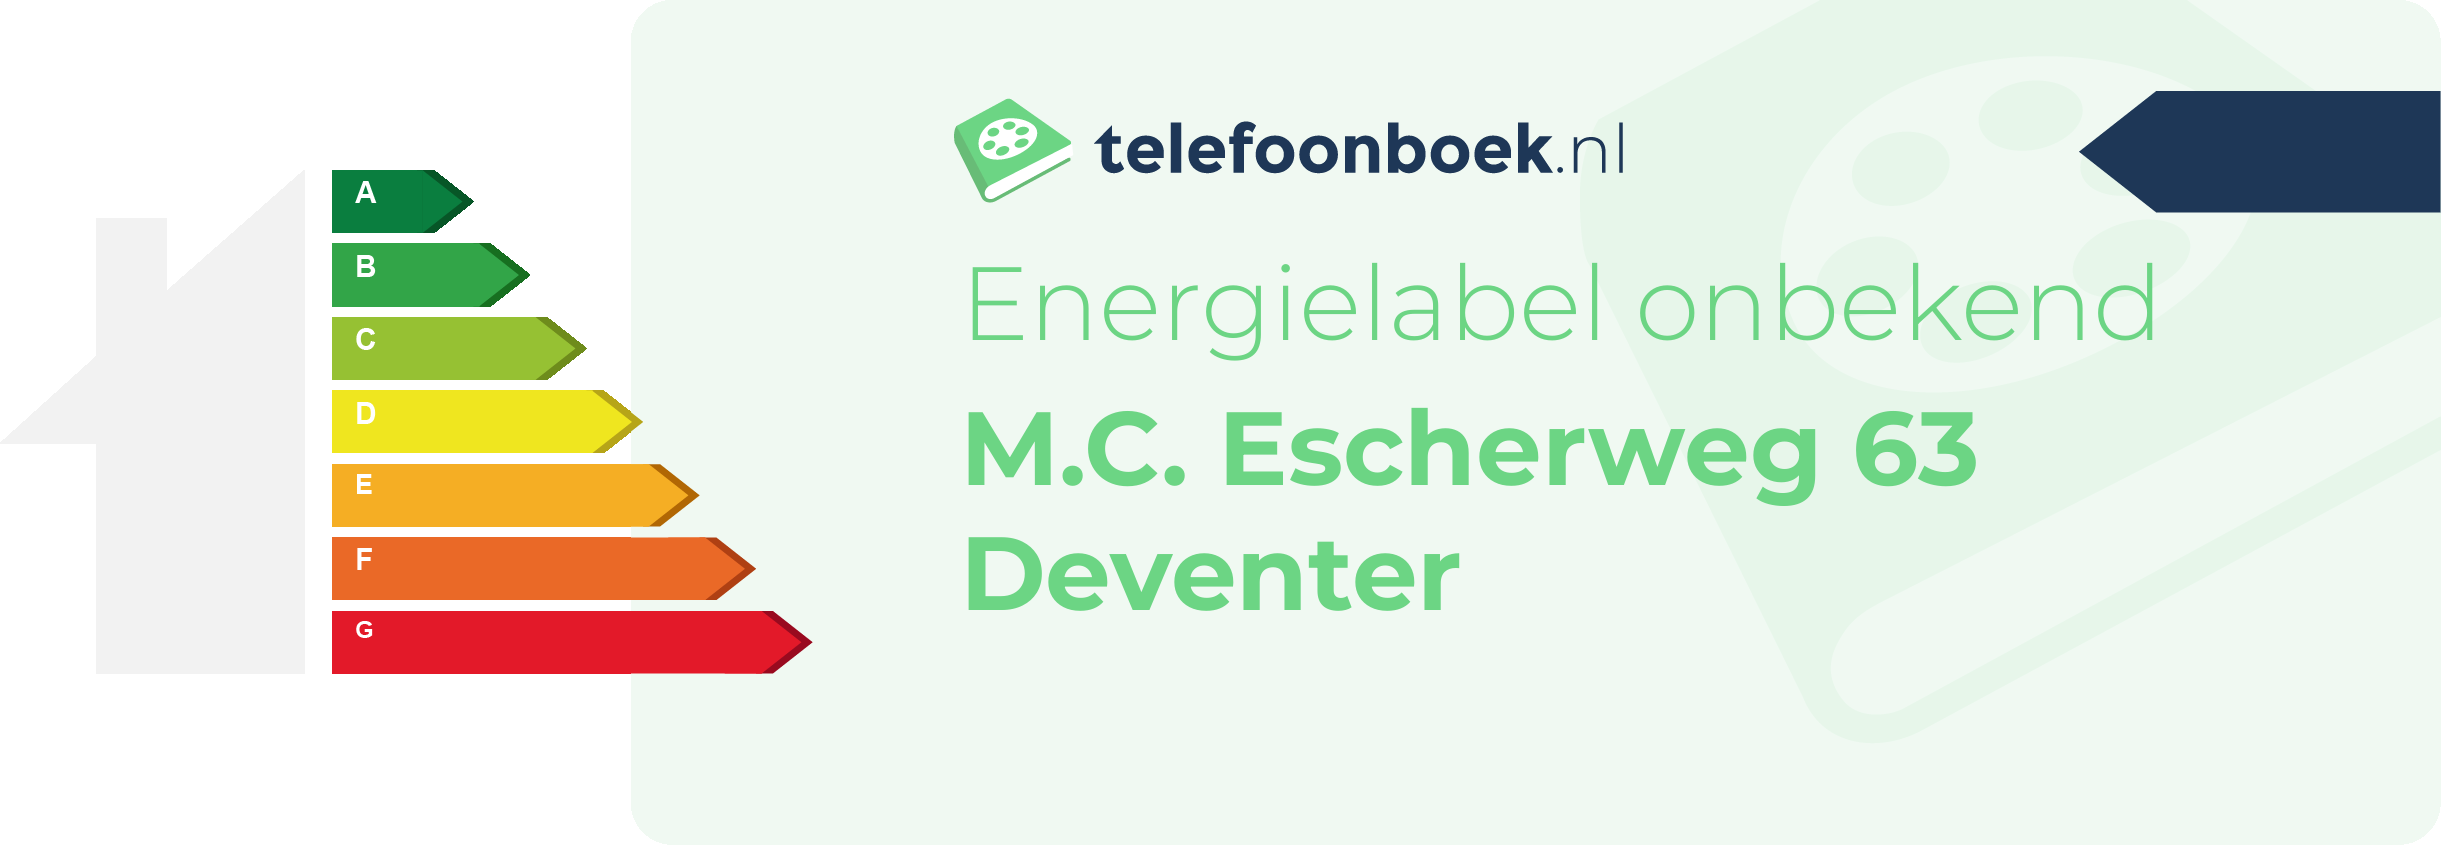 Energielabel M.C. Escherweg 63 Deventer